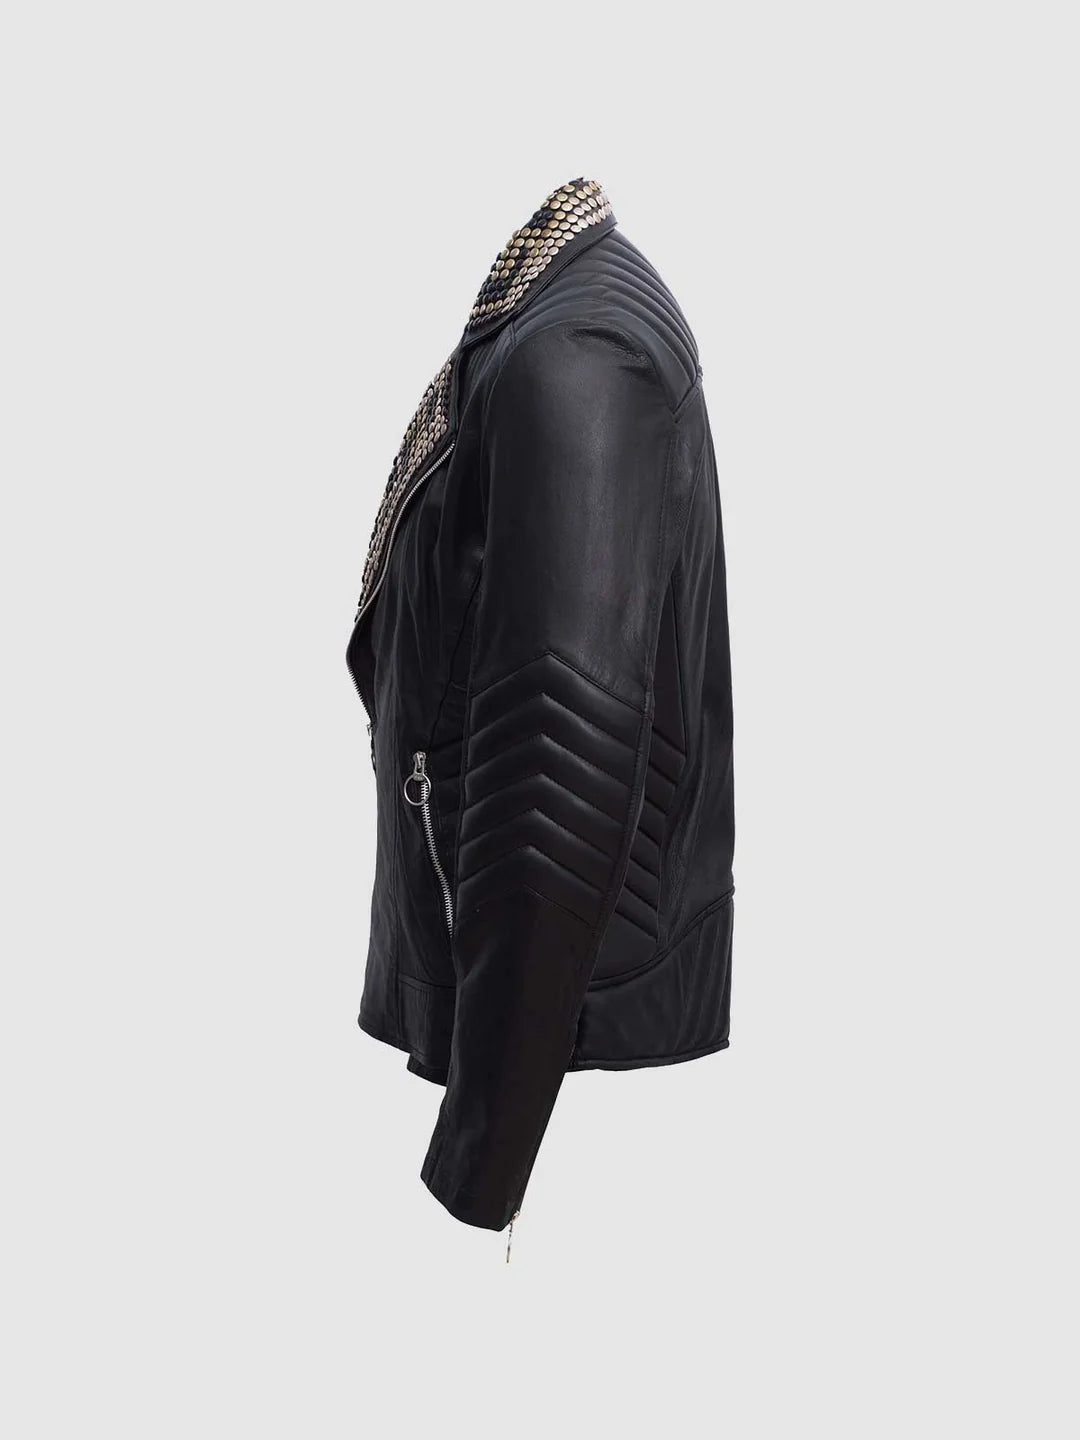 Men's Leather Jackets DESIGNS BY ZEWAH